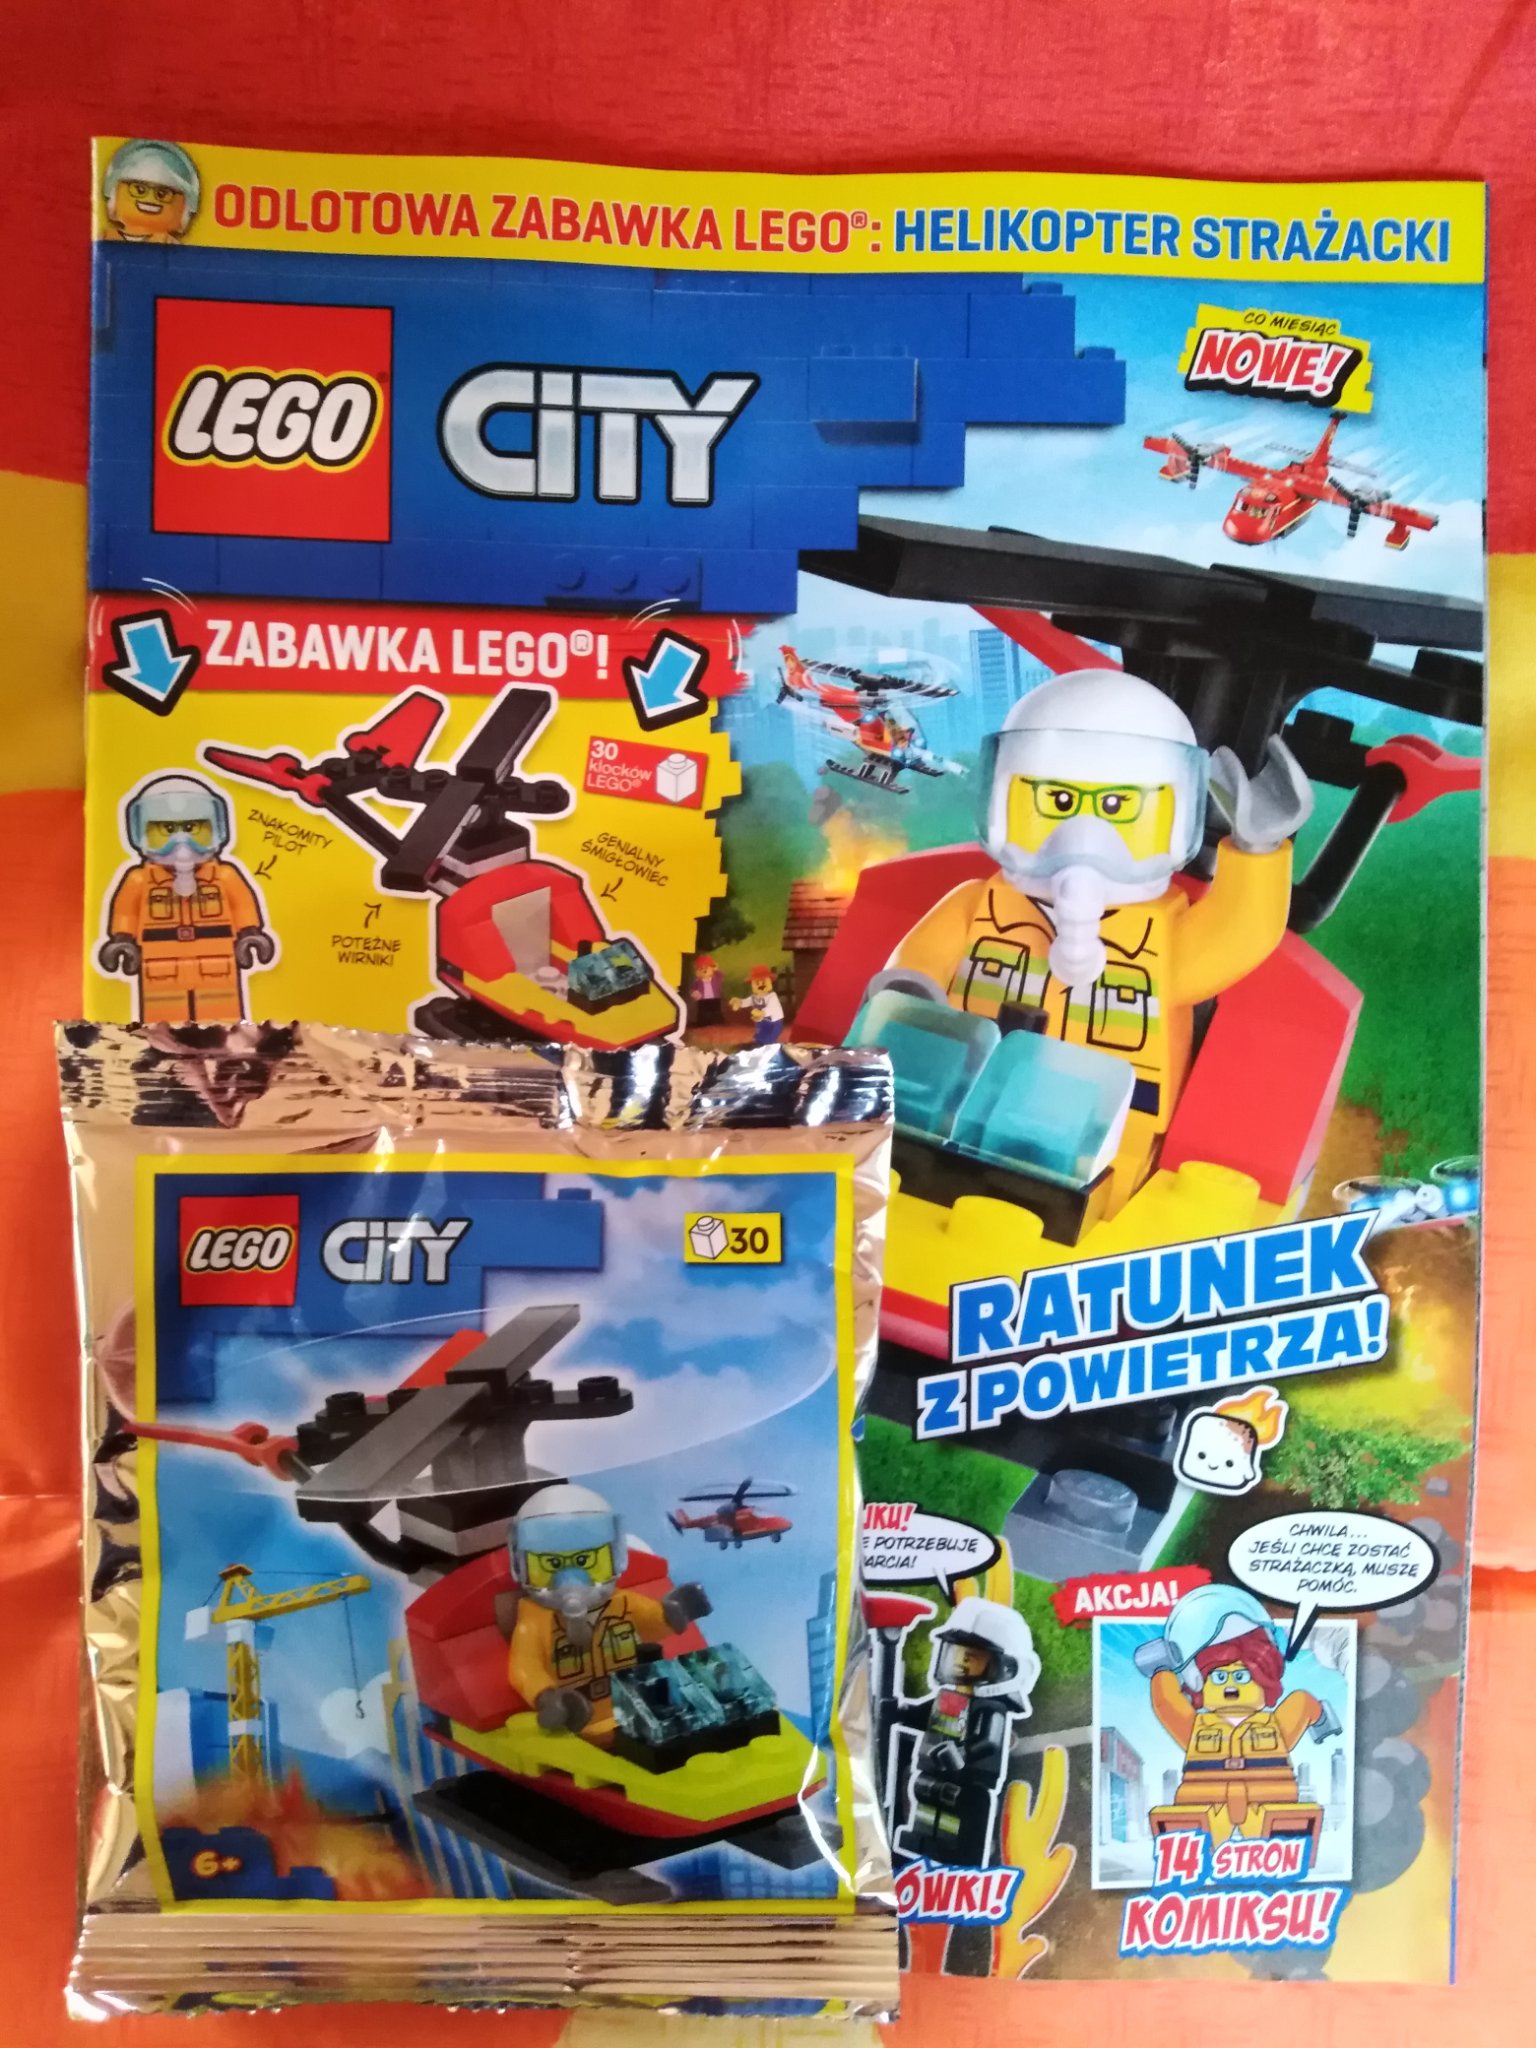 Will Vdh Twitter: "#LEGO city https://t.co/1r8uINClbL" / X